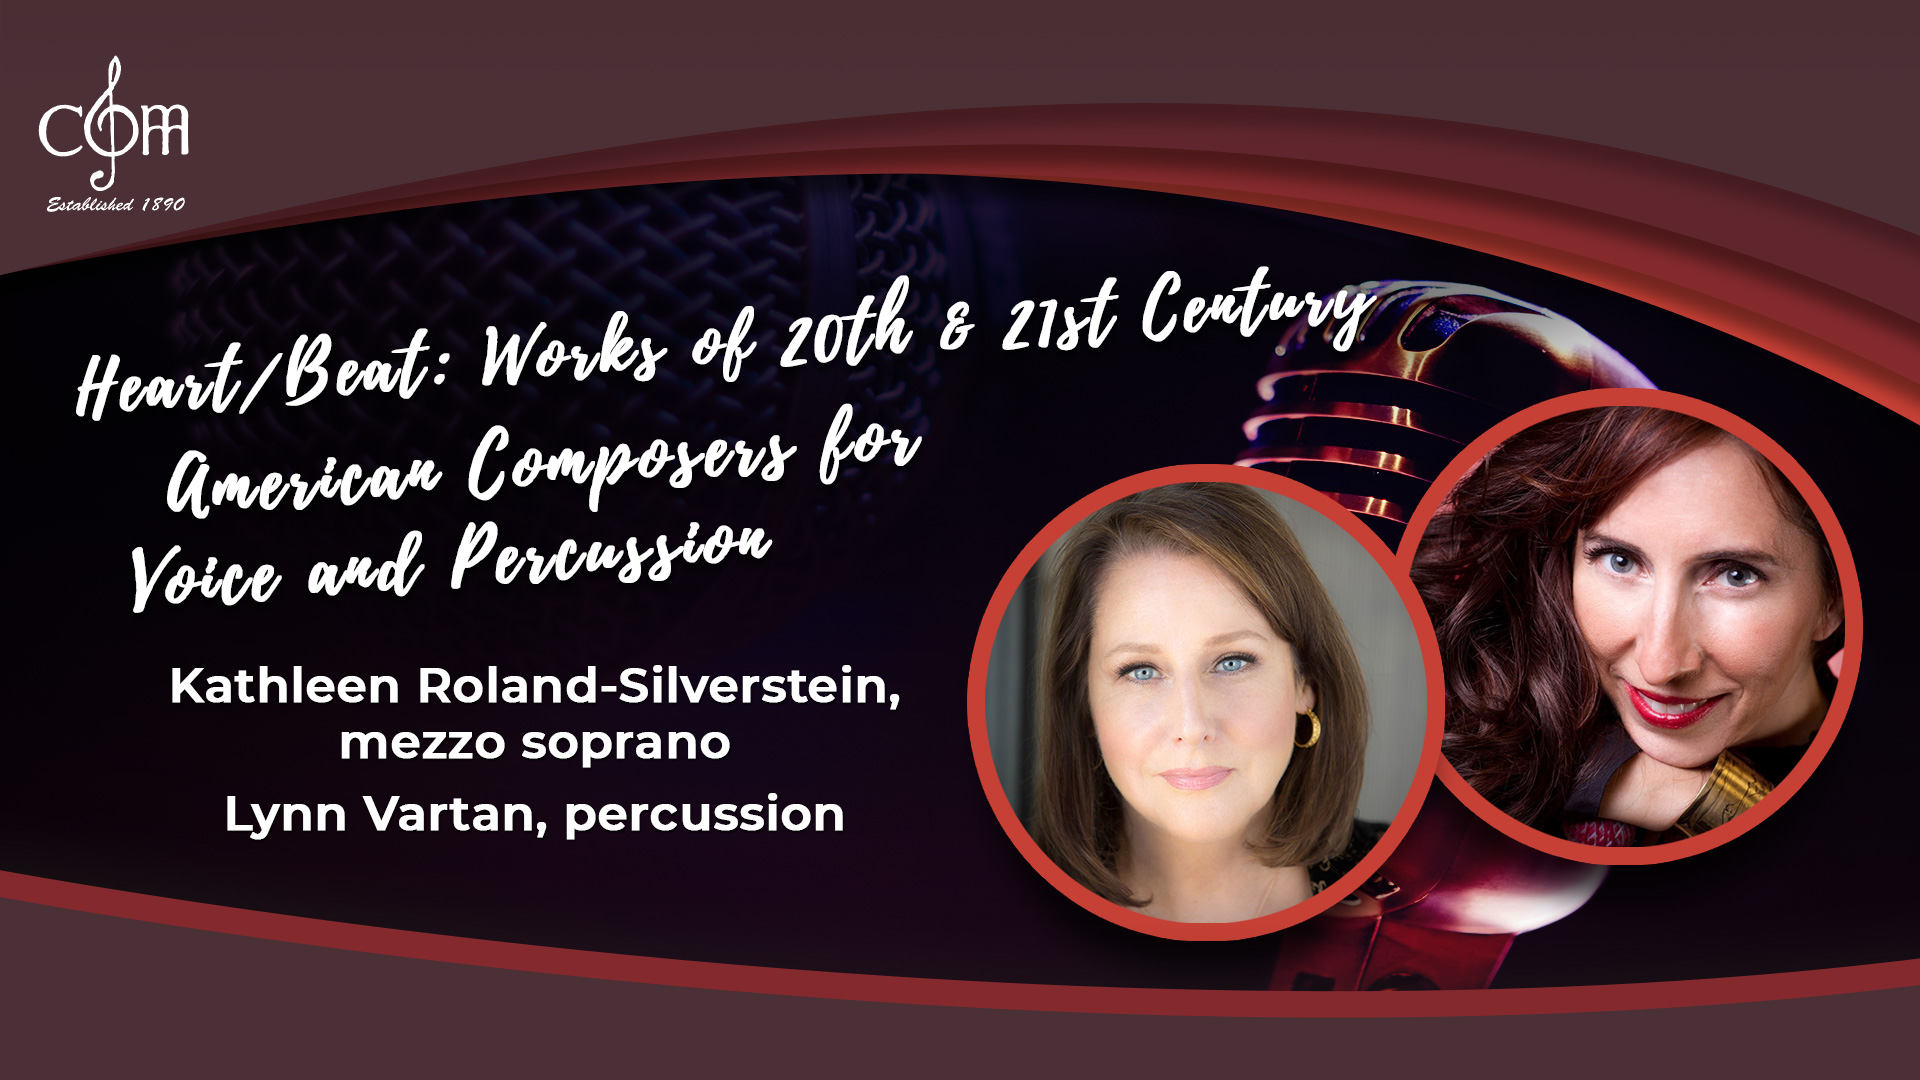 Kathleen Roland-Silverstein, mezzo soprano; Lynn Vartan, percussion